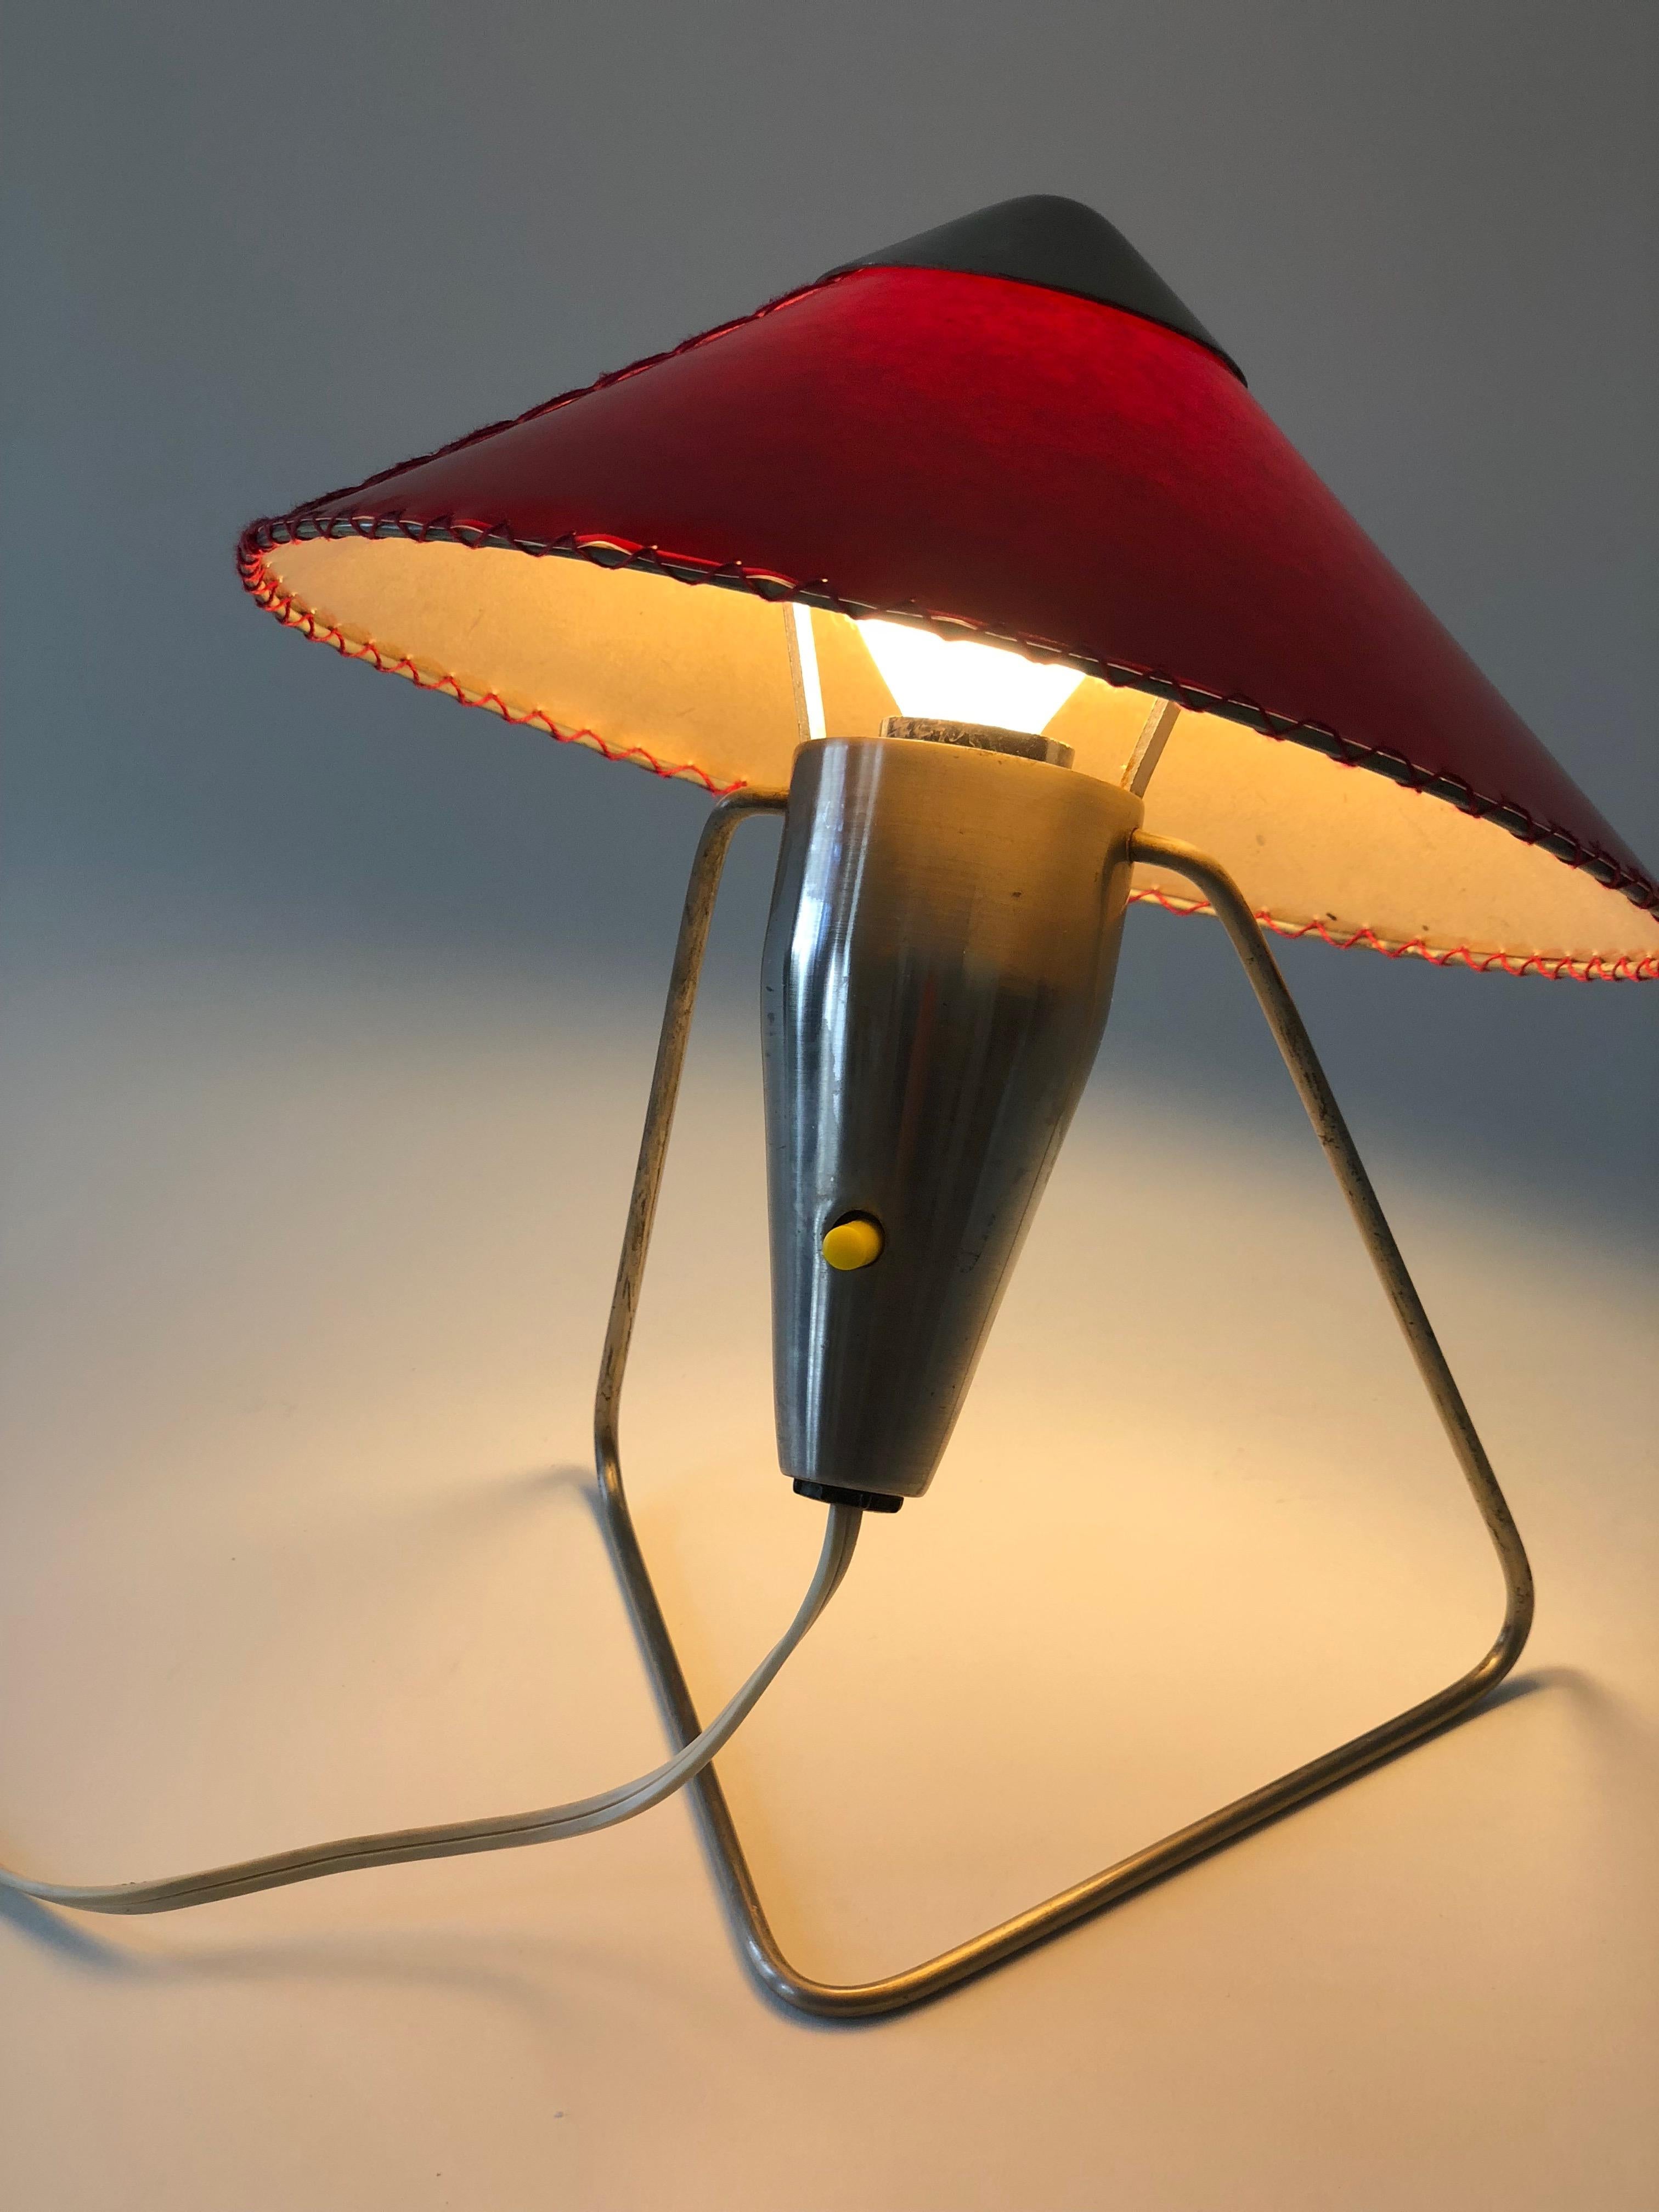 Czech Modernist Desk Lamp by Helena Frantova, 1953 For Sale 1